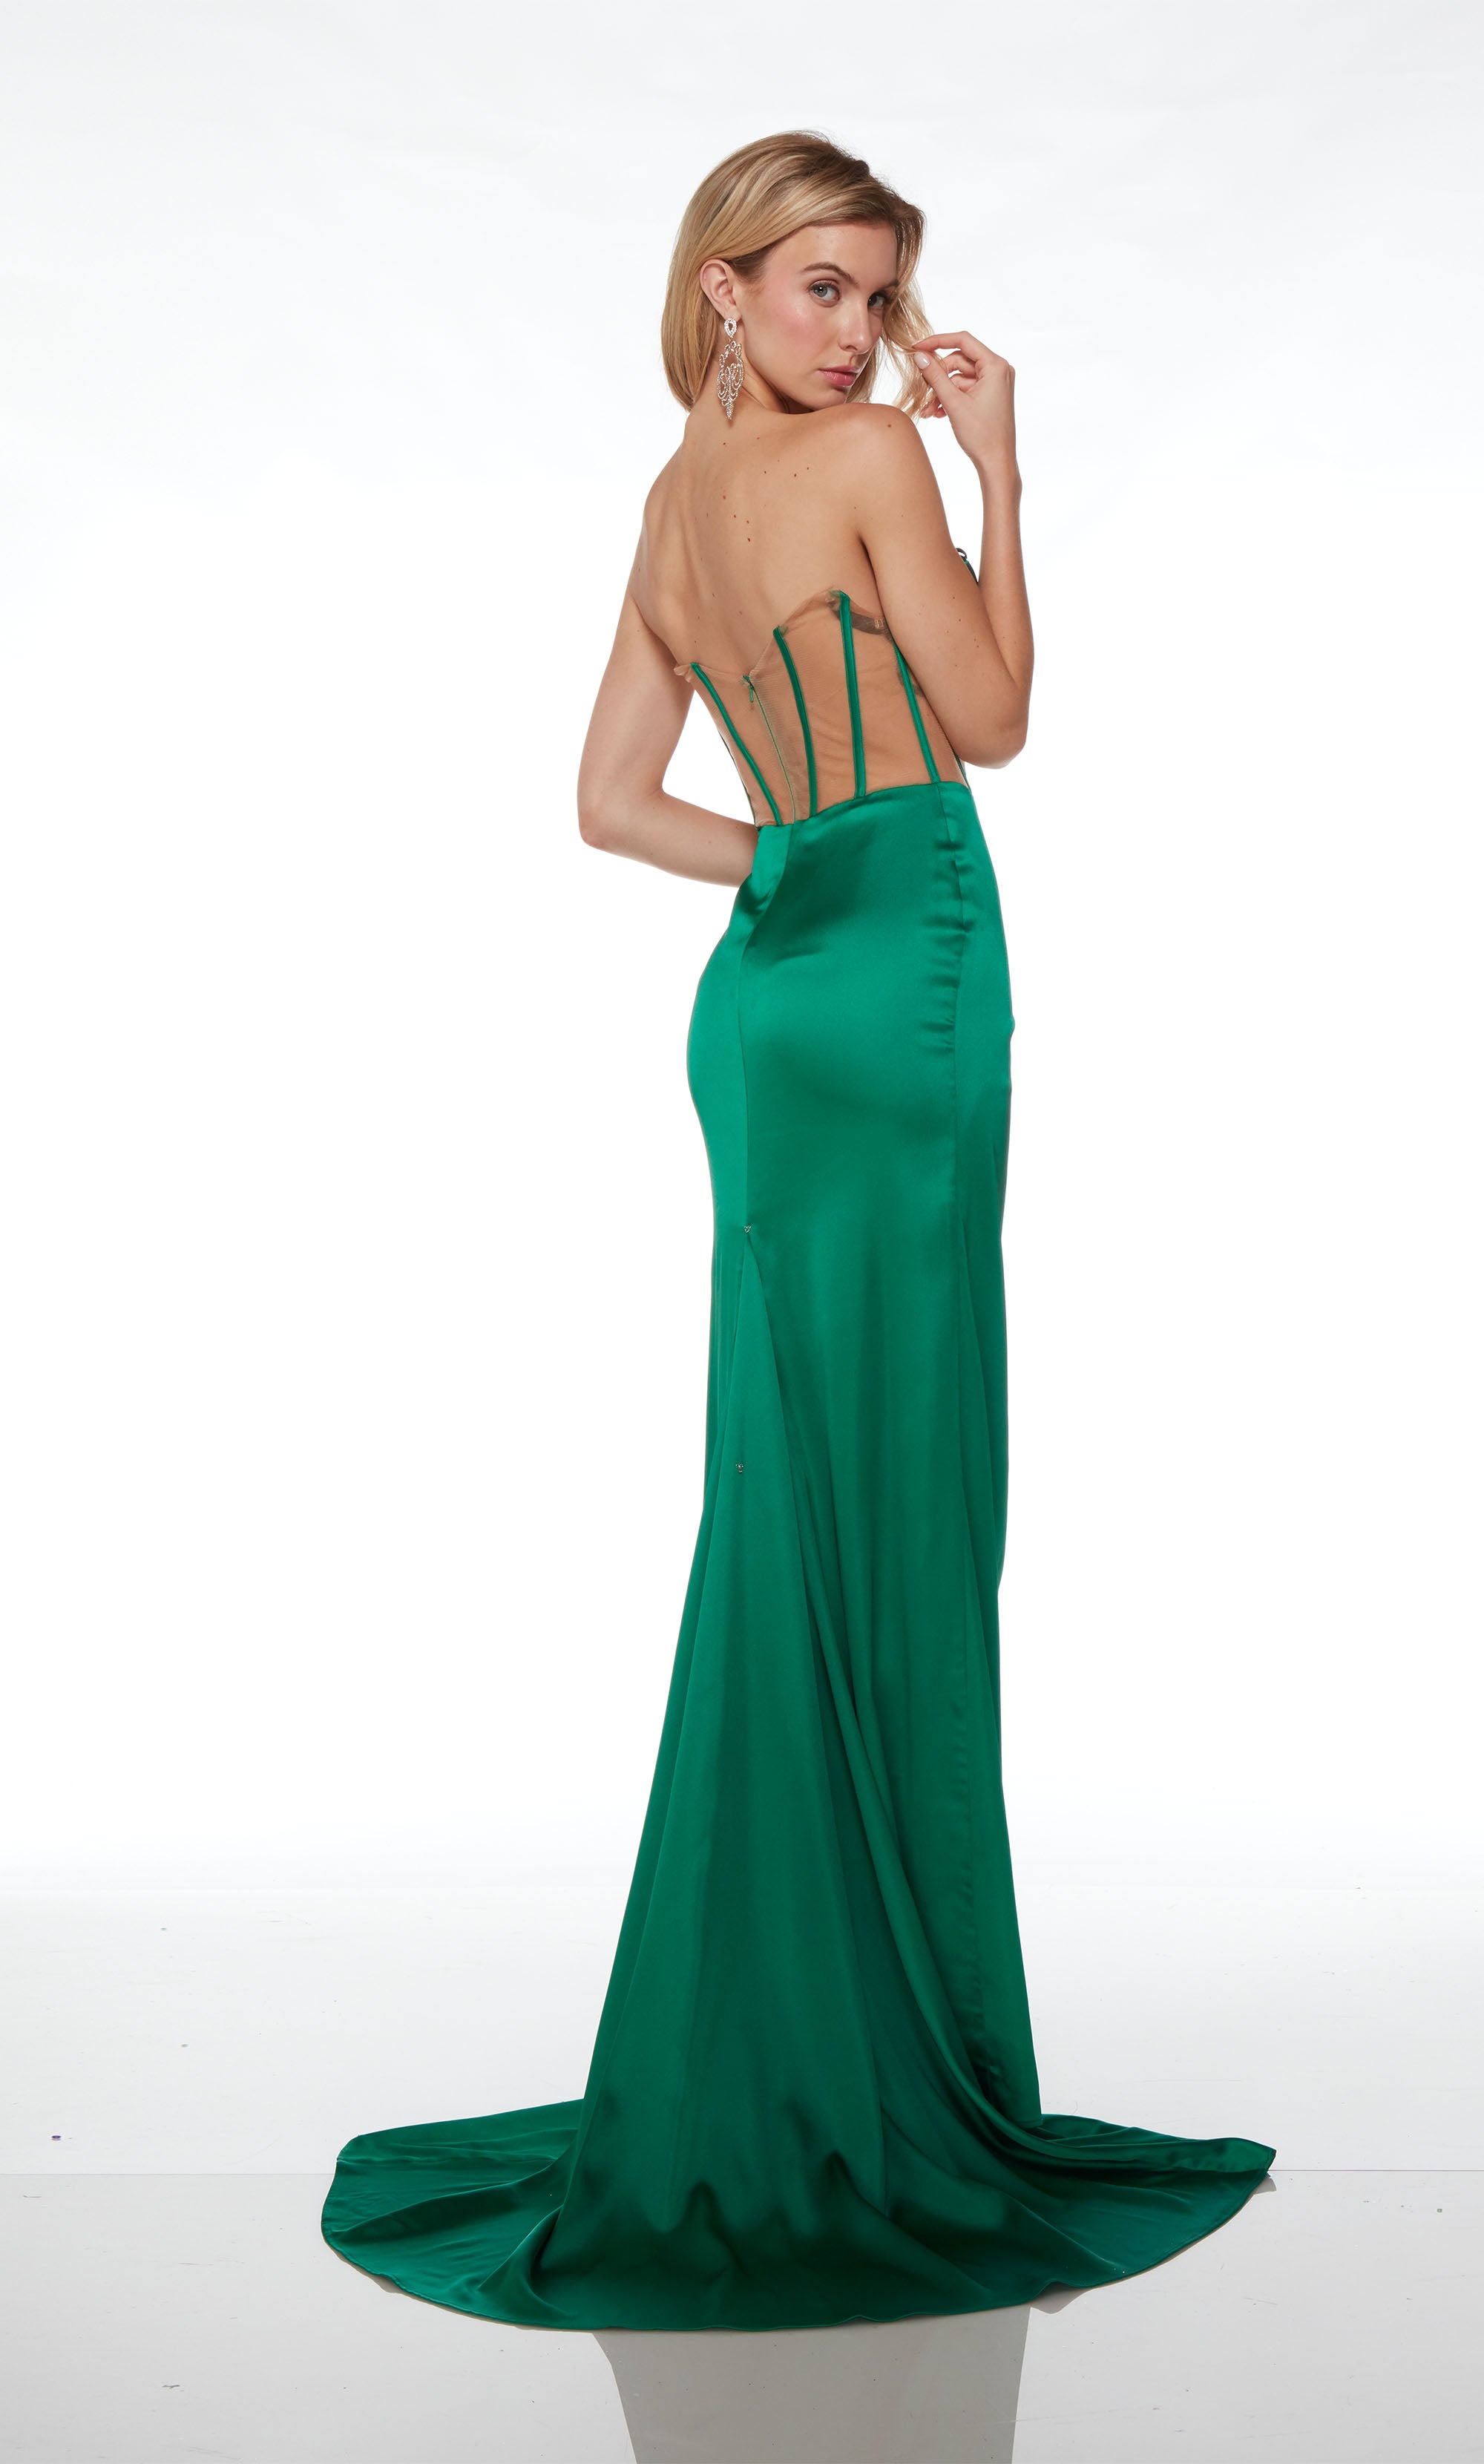 Jossa satin A line full skirt ballgown prom dress - green